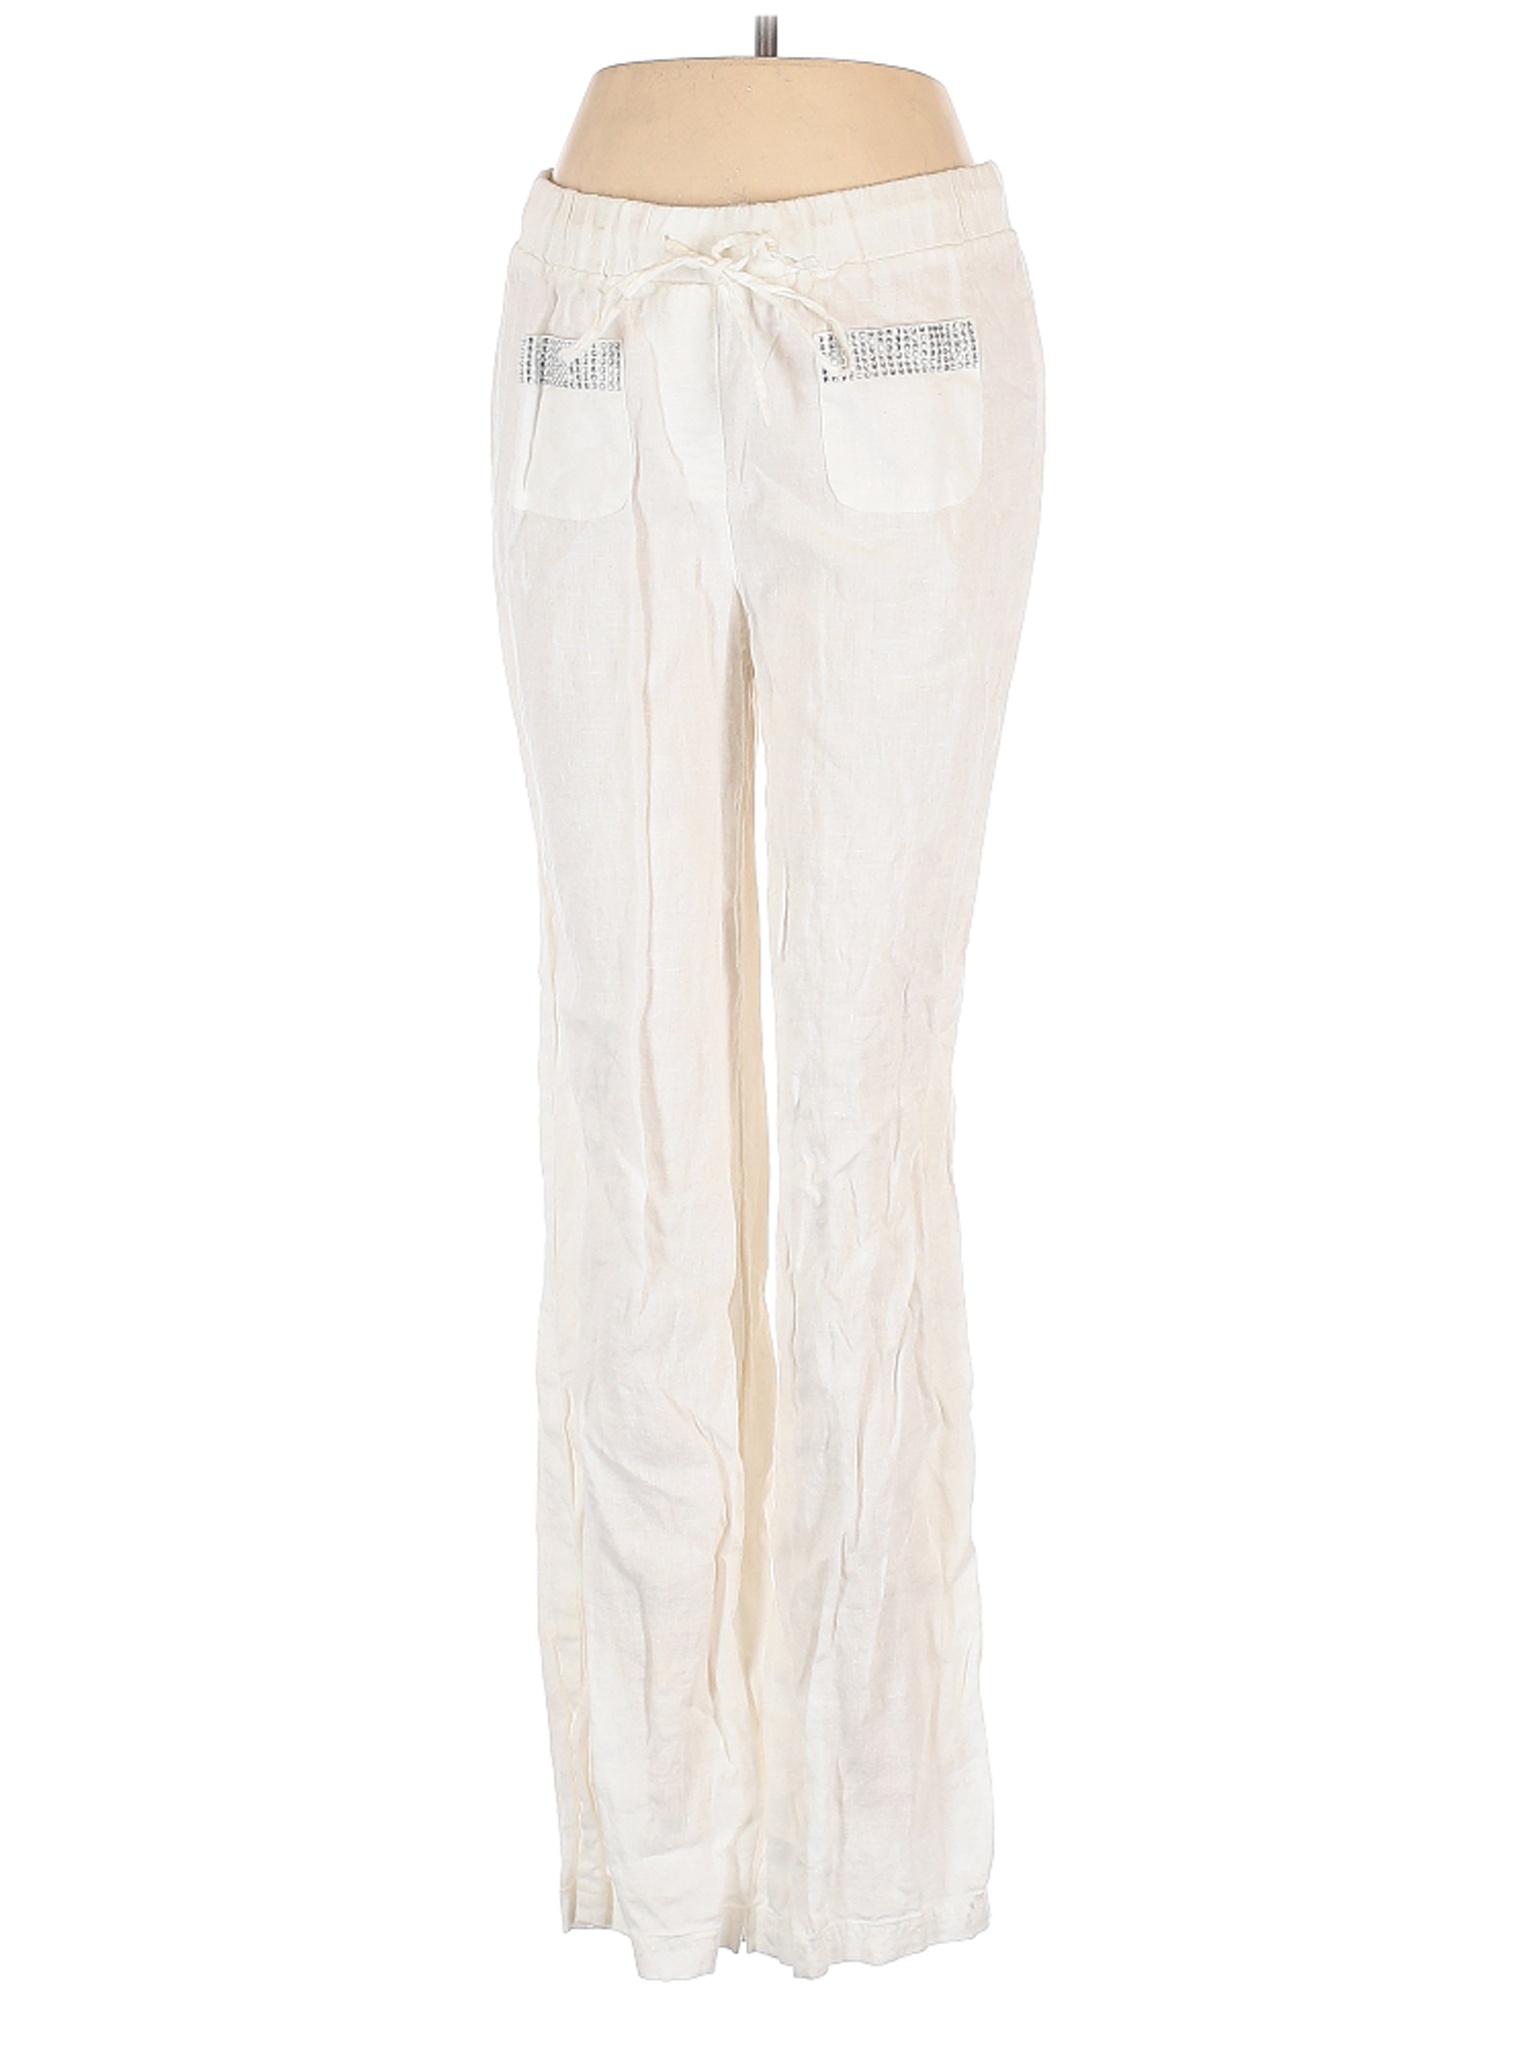 Style&Co Women White Linen Pants 6 | eBay